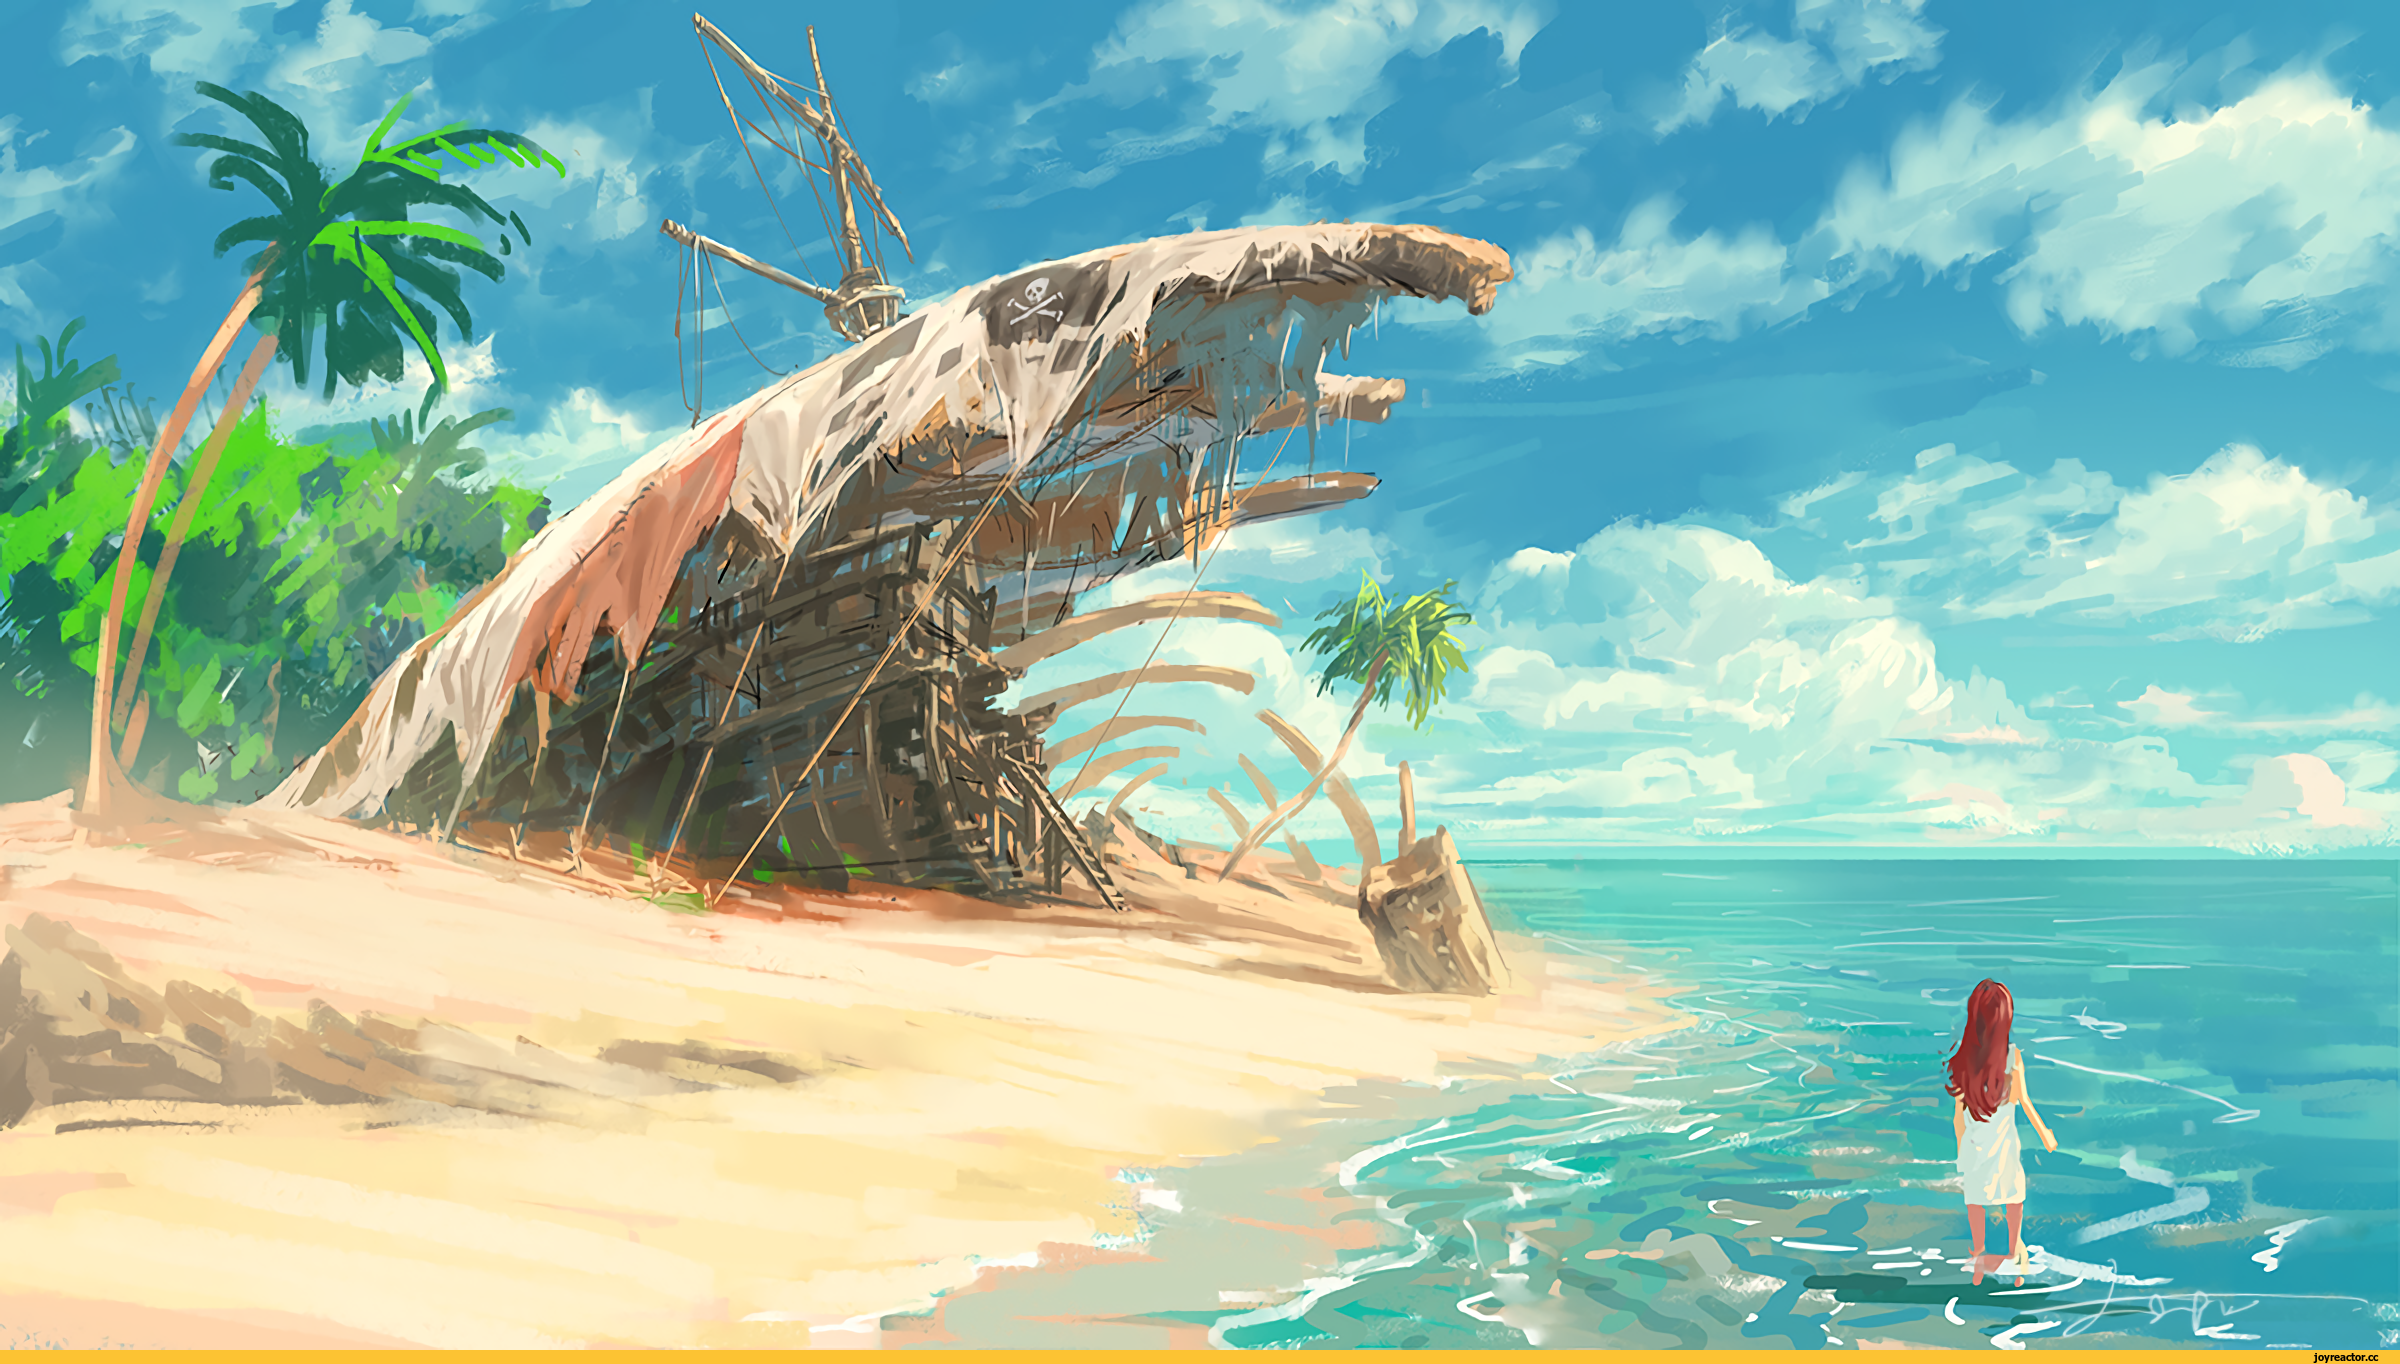 Море арт. Пляж арт. Пляж иллюстрация. Animeverse island